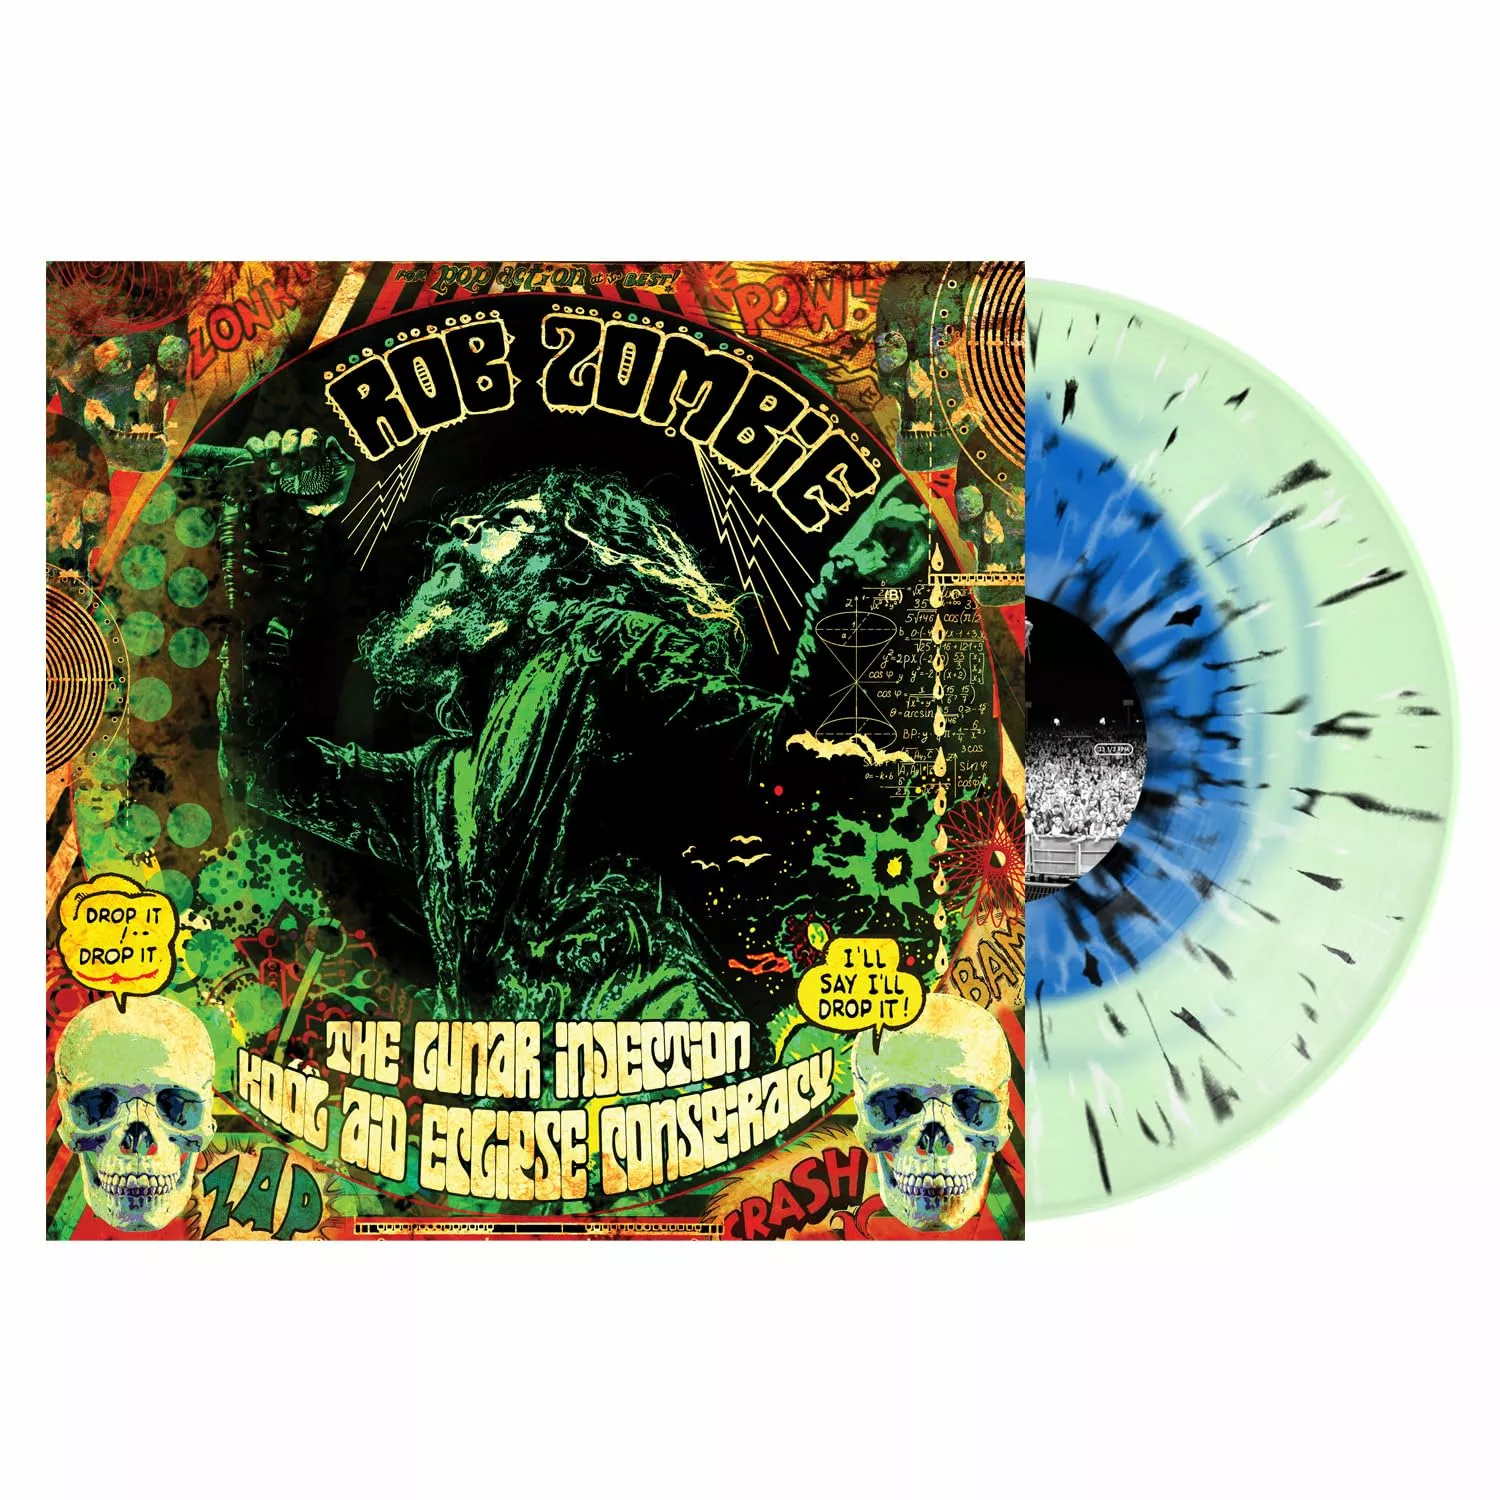 ROB ZOMBIE - The lunar injection kool aid eclipse conspiracy [BLUE/BOTTLE GREEN/BLACK/BONE SPLATTER LP]